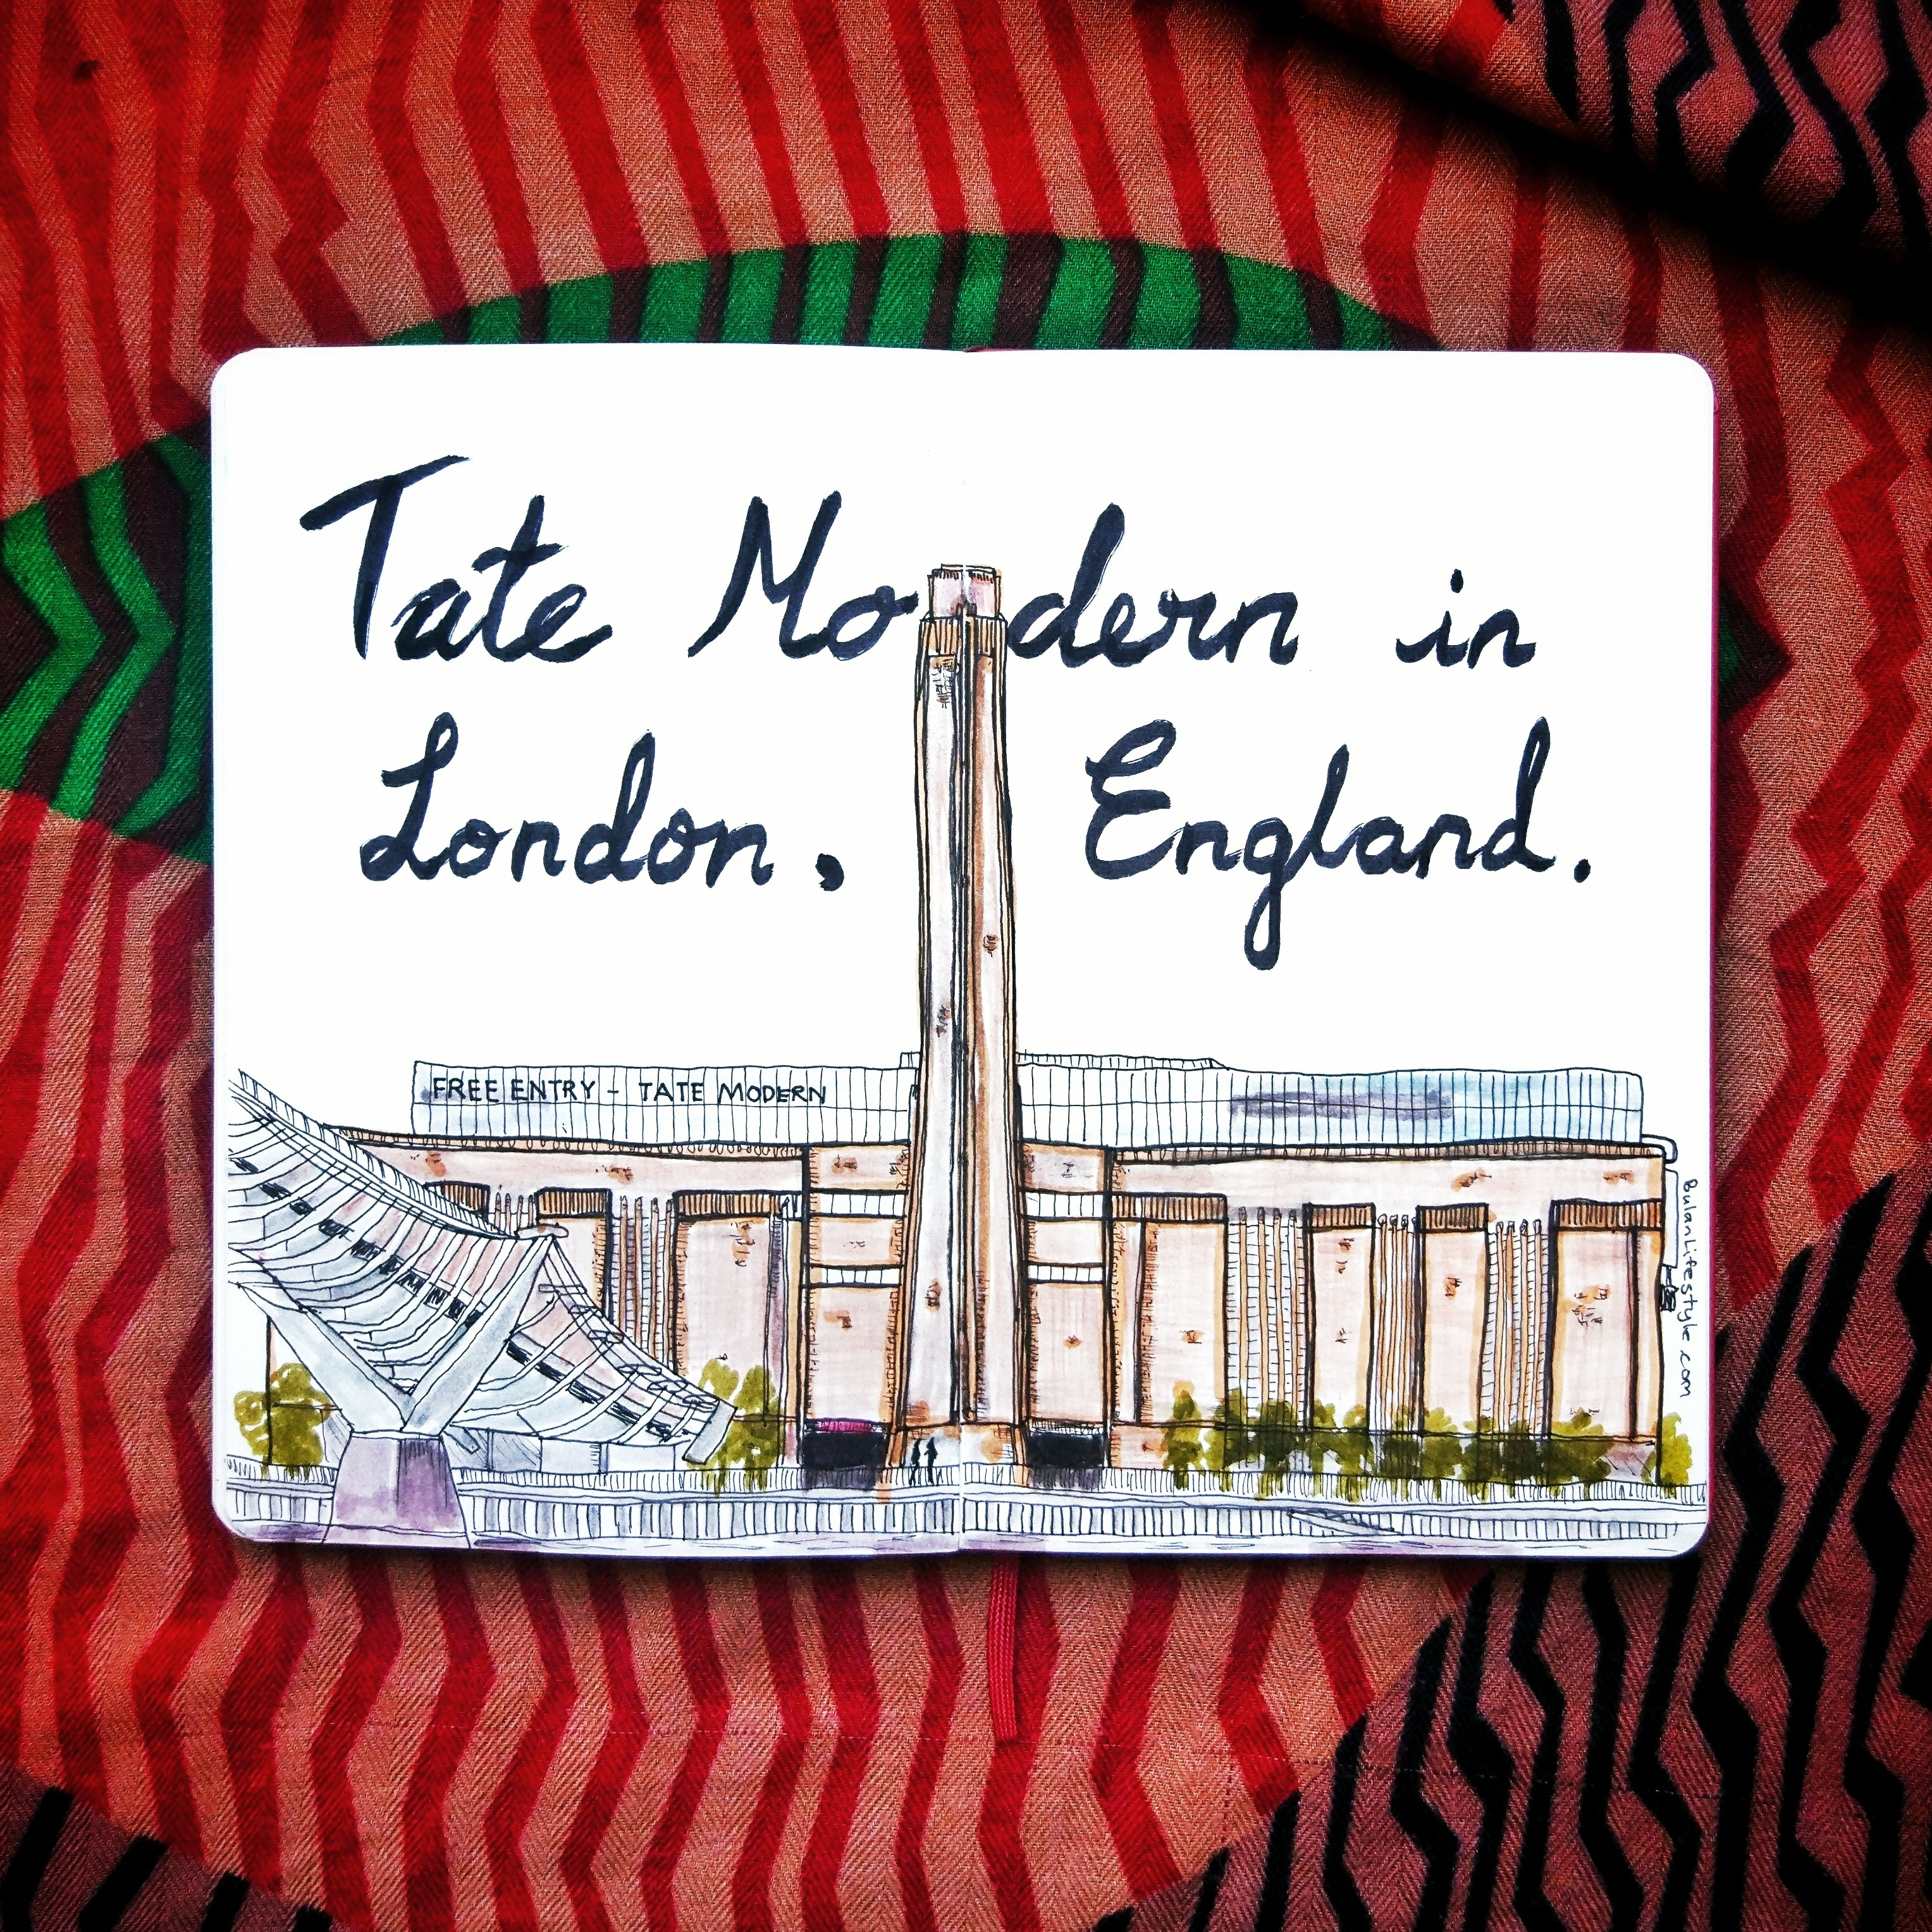 Tate modern ln London, England.